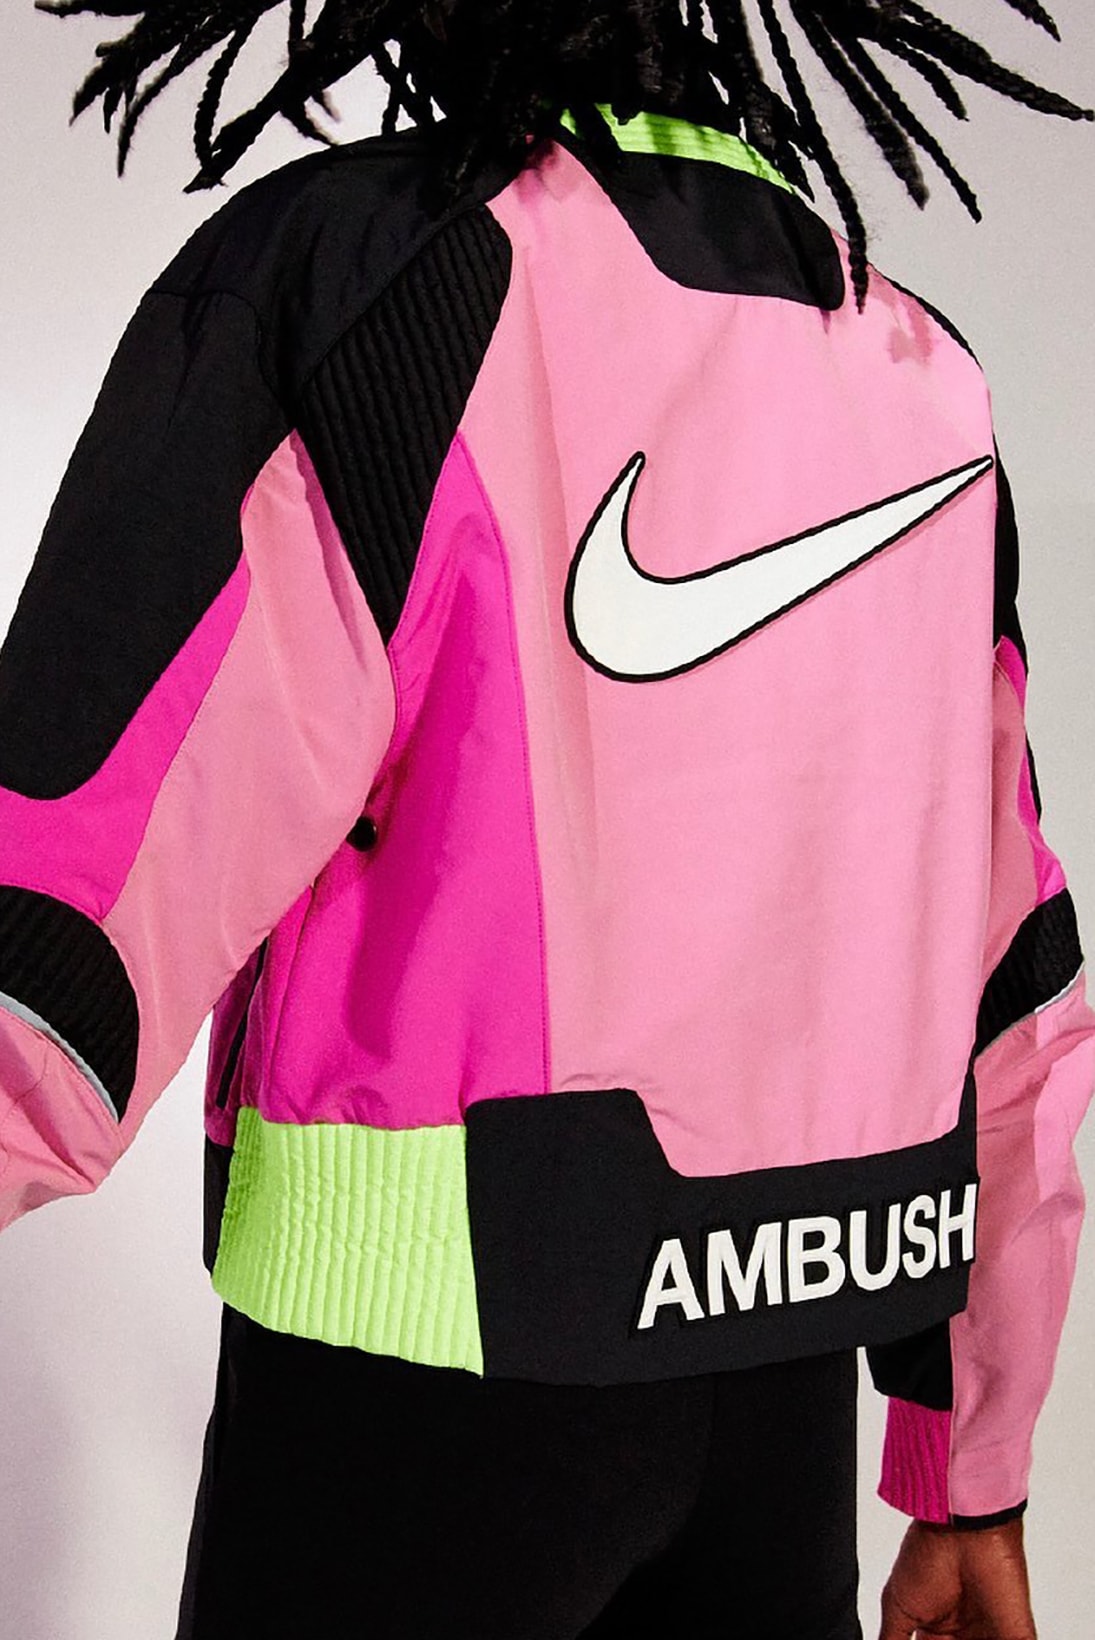 ambush nike tokyo olympics collaboration yoon ahn jacket pink neon green